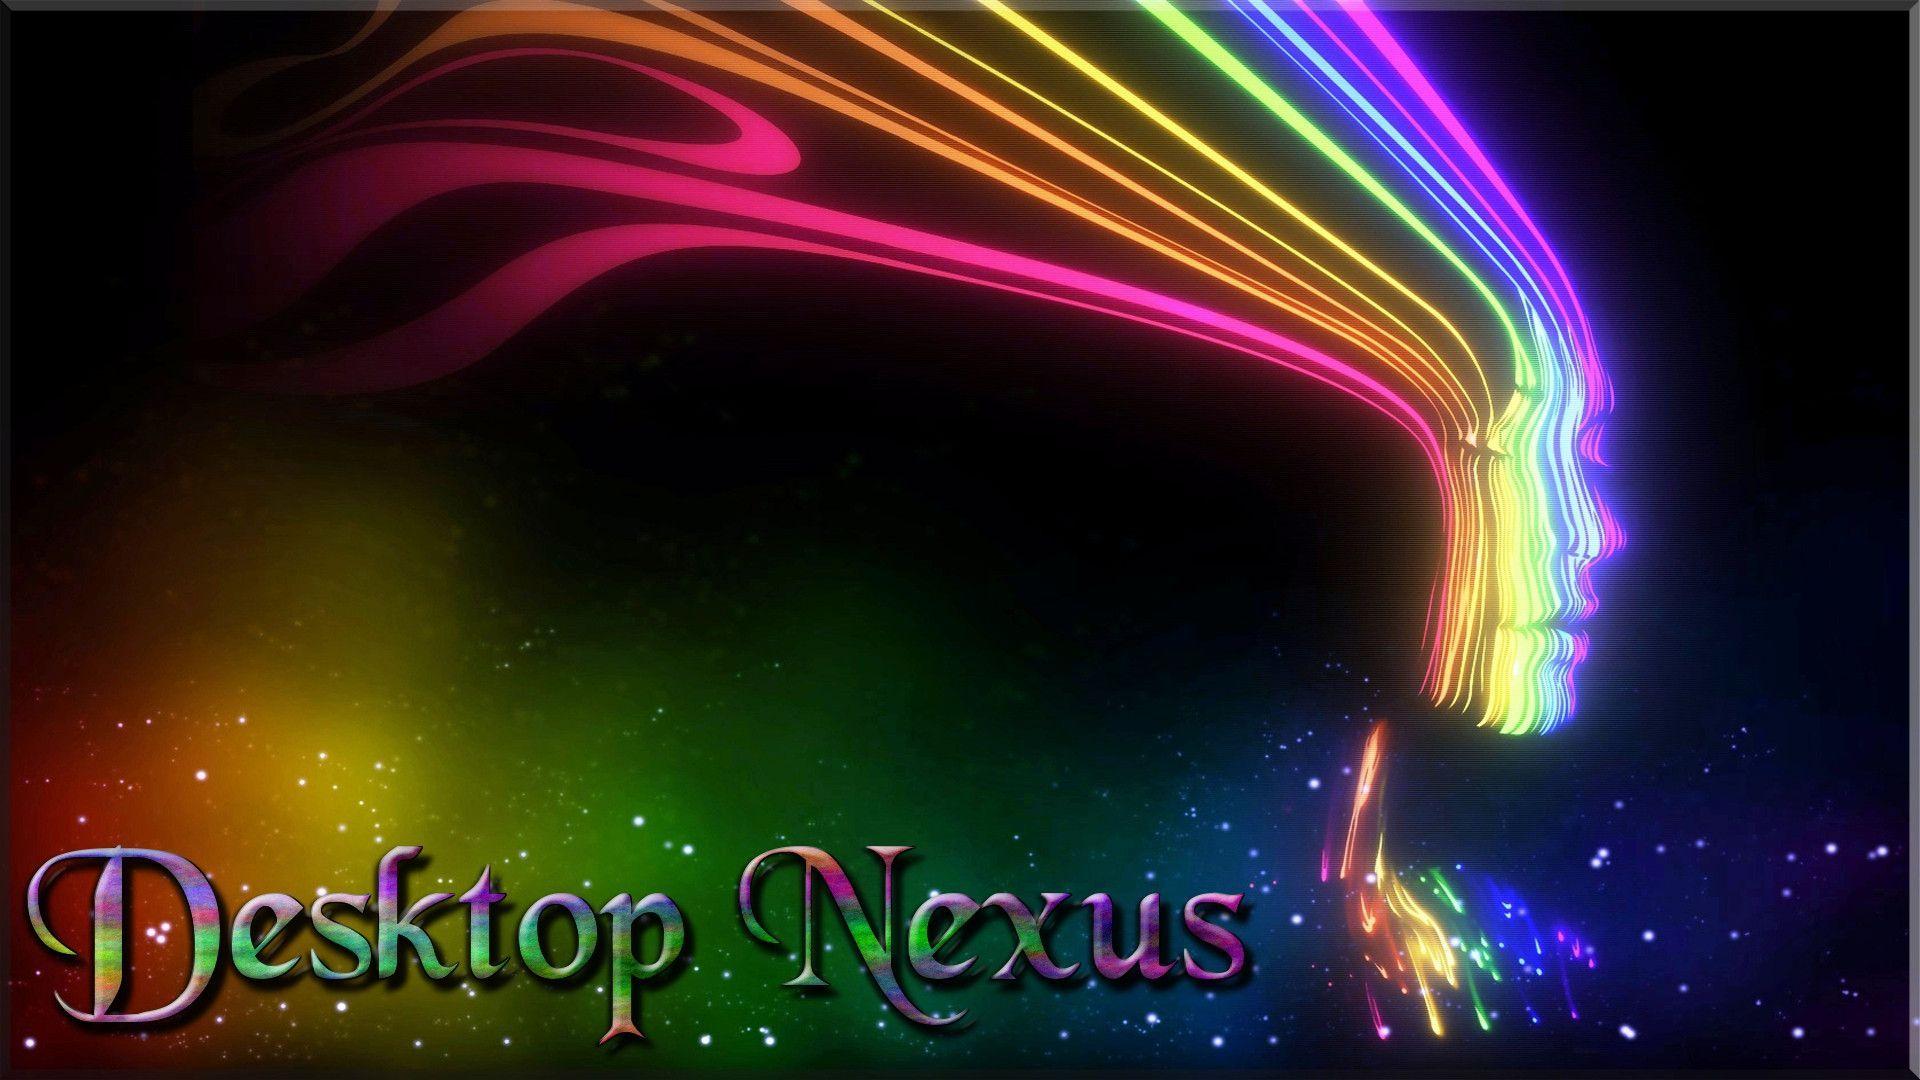 Abstract Nexus Wallpaper Free Download HD Wallpaper Picture. Top